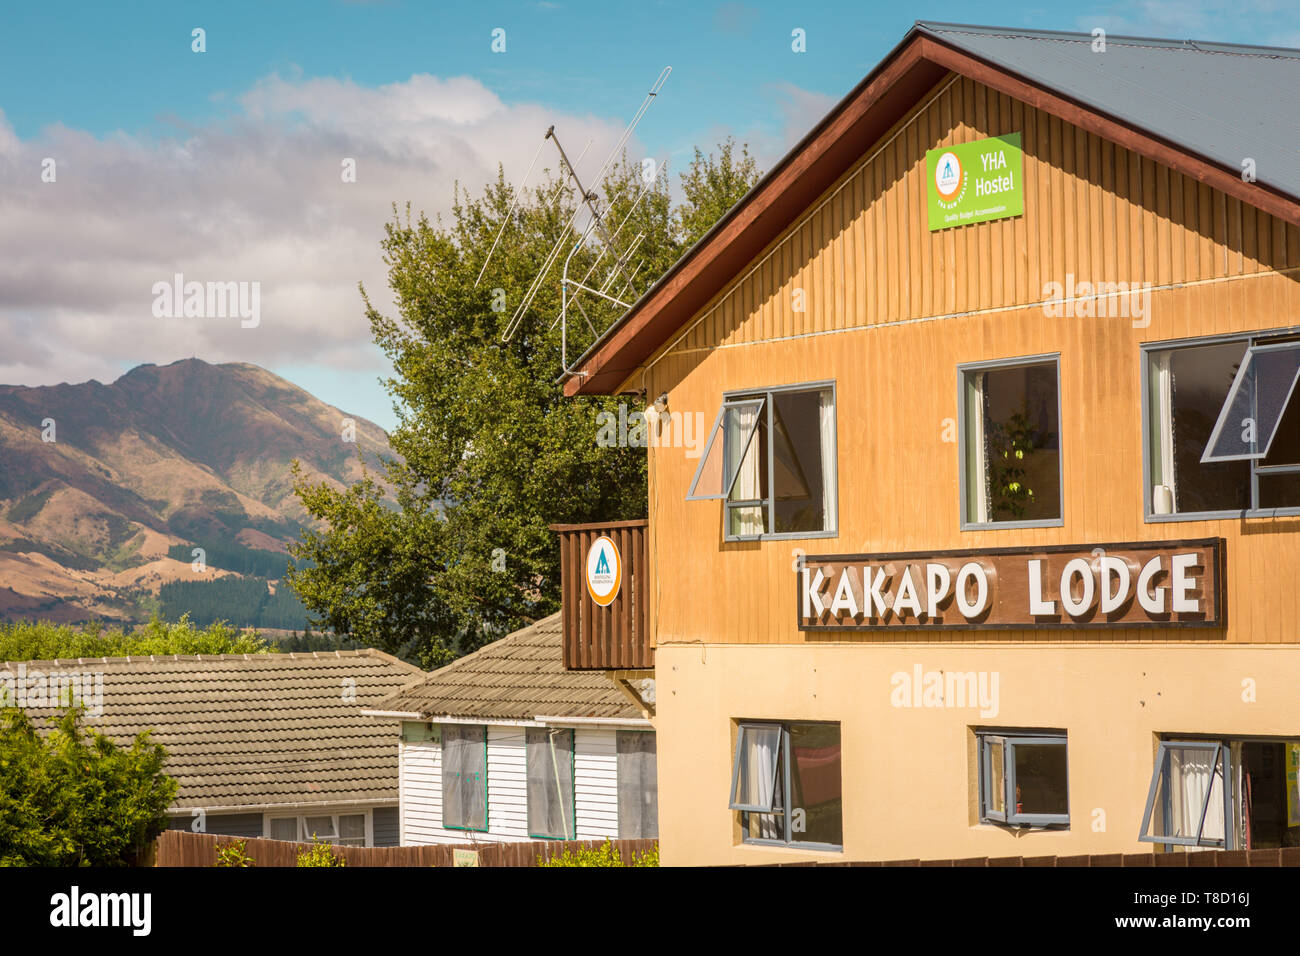 Kakapo lodge accommodation, Hanmer Springs, New Zealand Stock Photo